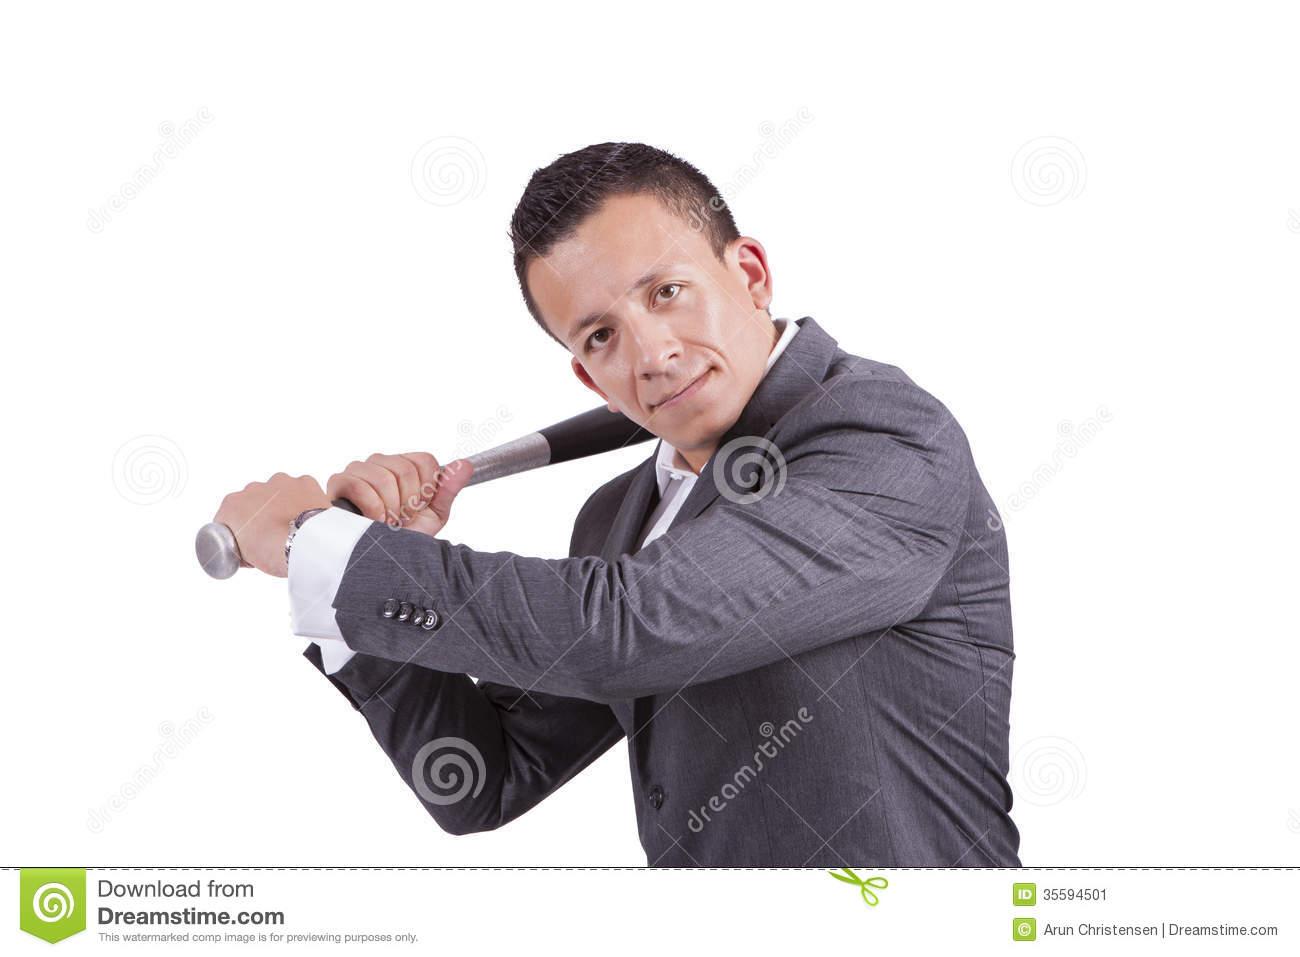 Man swinging bat